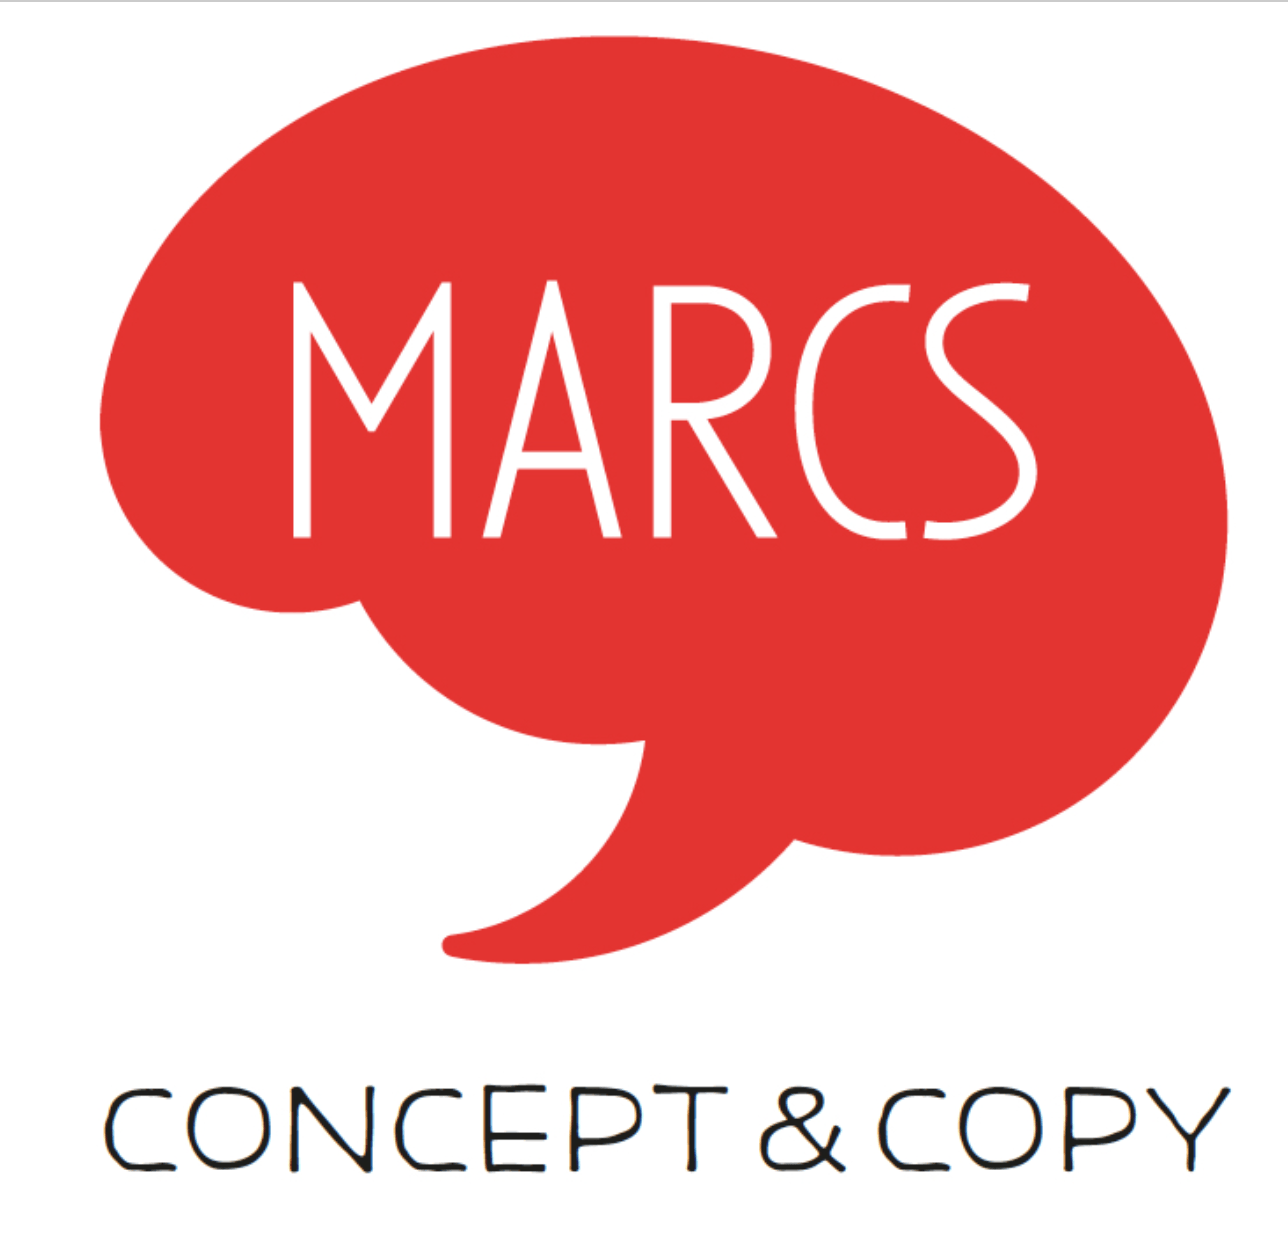 Marc's Logo - MARCS concept & copy – Good thinks start here